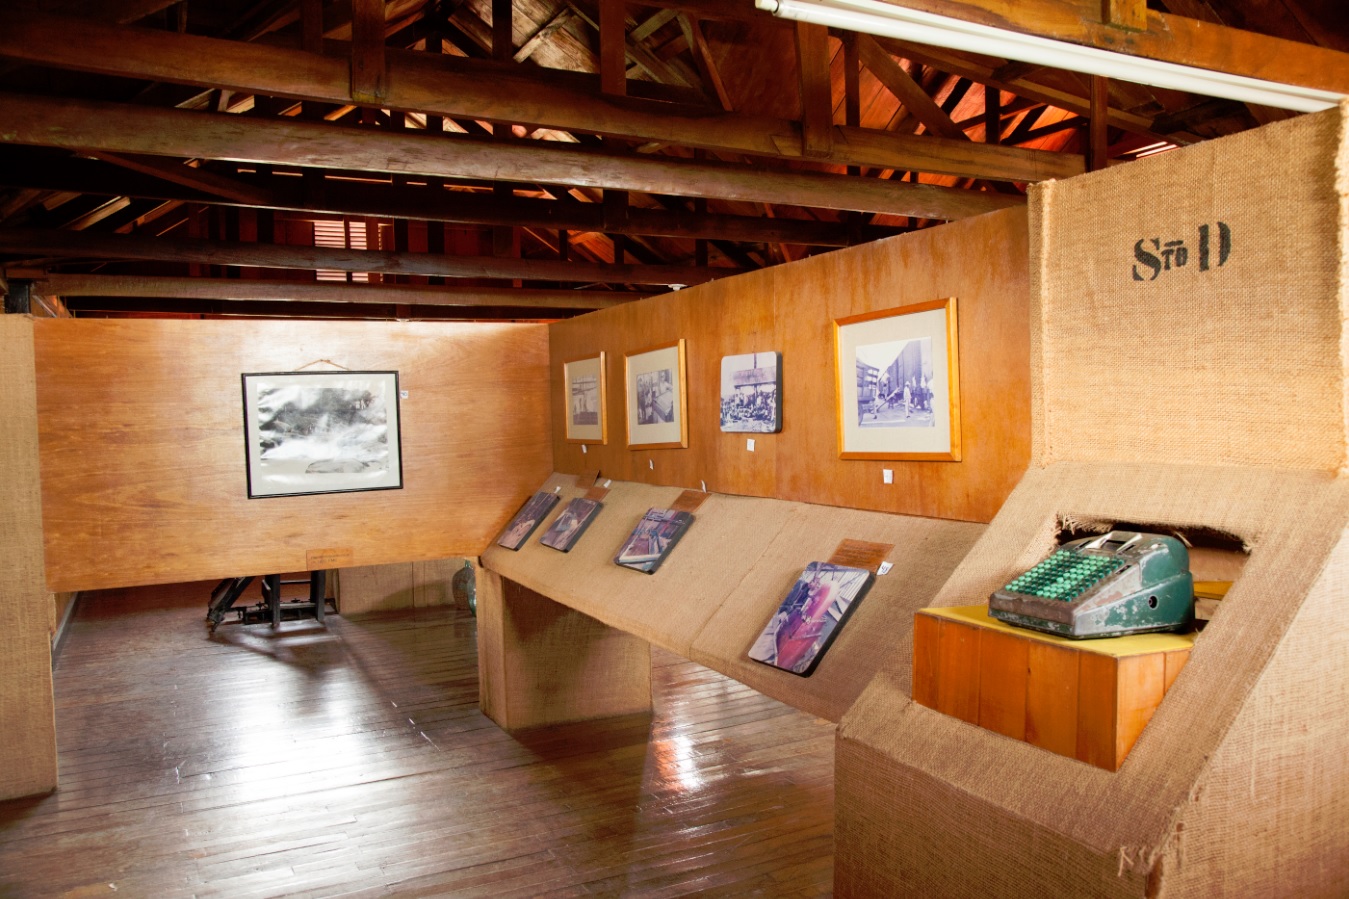 /cms/uploads/image/file/284817/Chiapas-Museo_del_Caf___en_la_Finca_Santo_Domingo.jpg